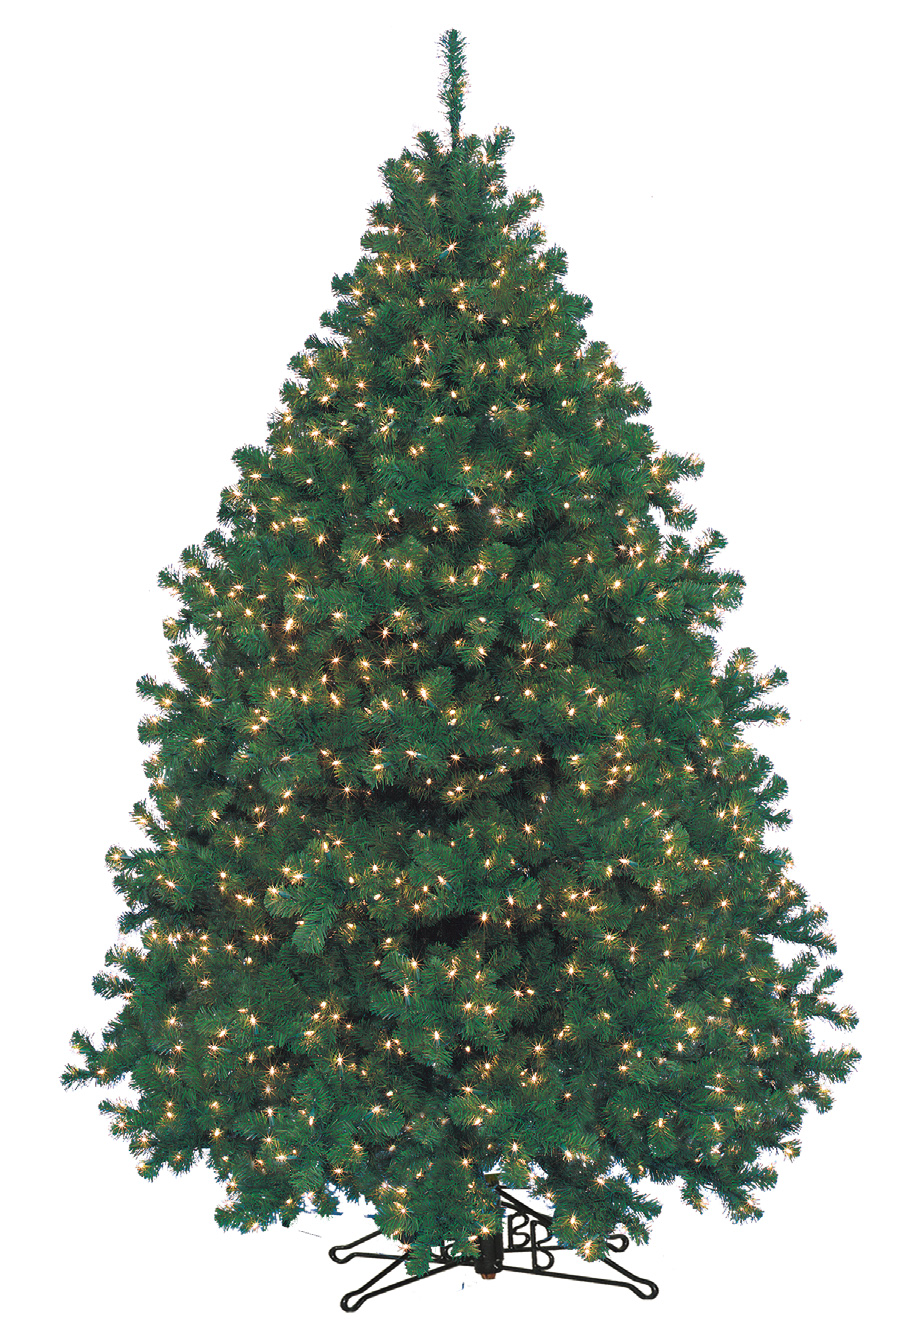 Alaskan Fir Christmas Tree - Medium - Multi-LED Lighting - One-Plug Power Supply - 12ft Tall